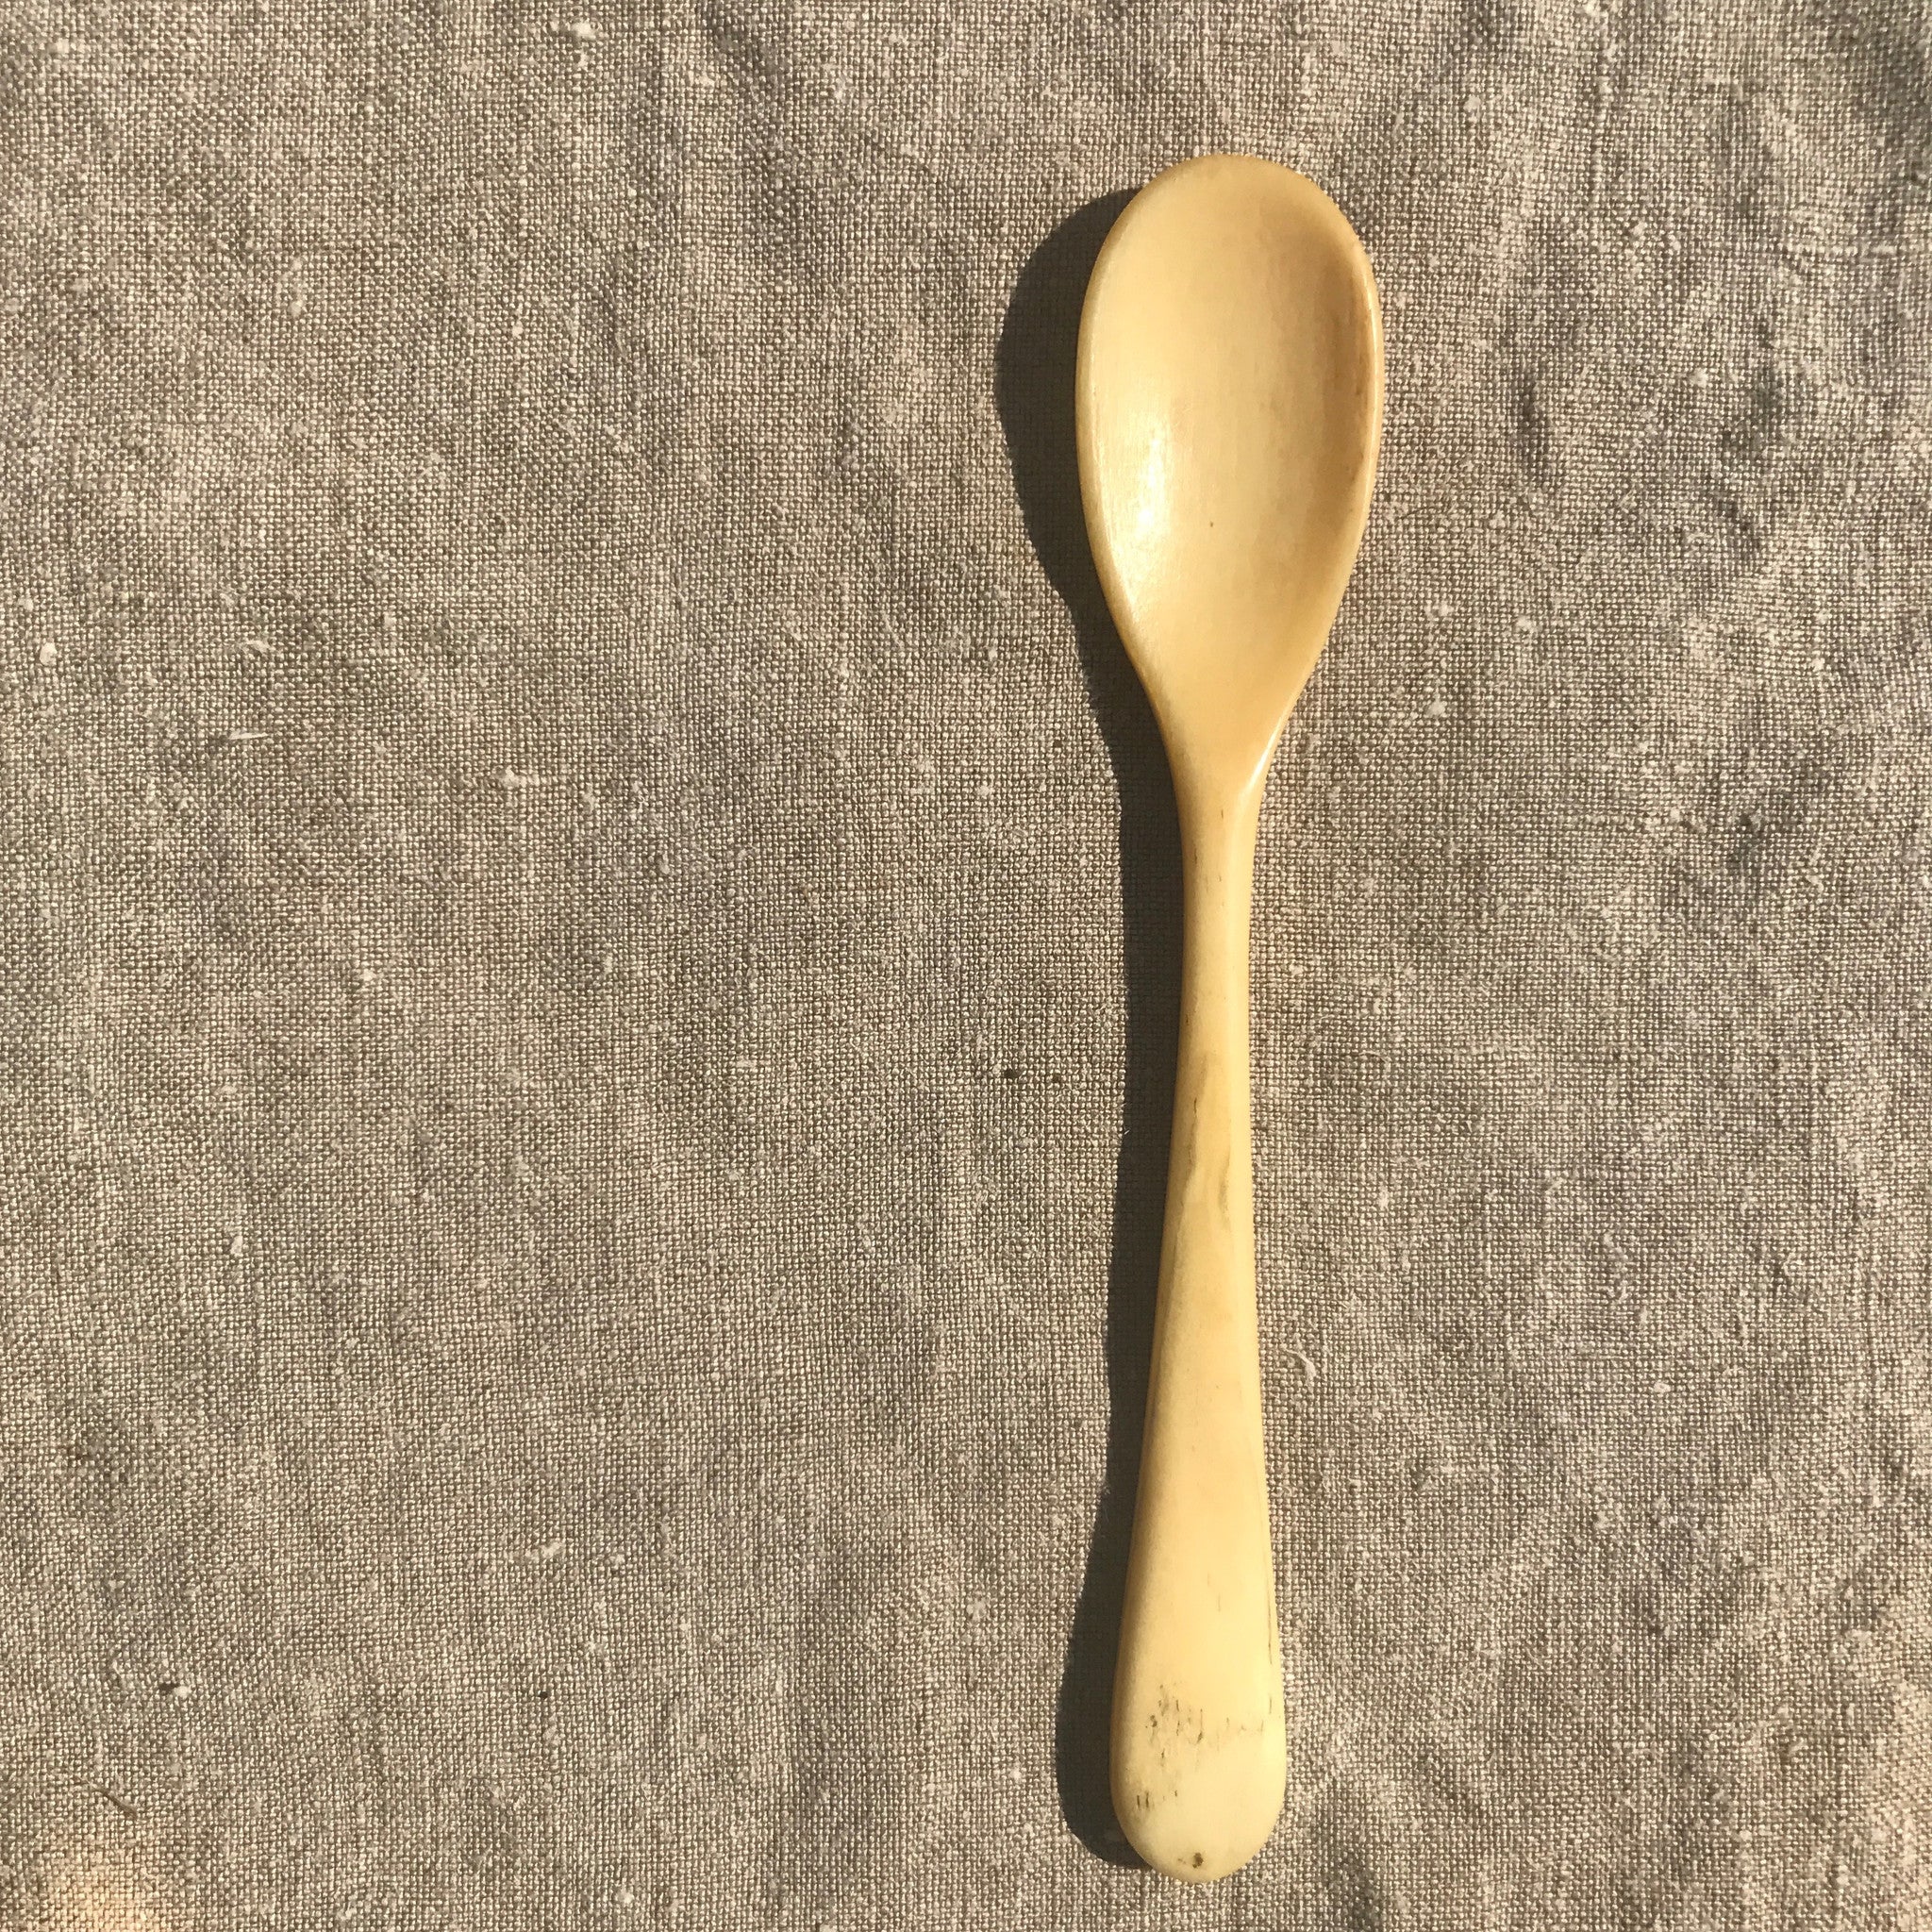 seaman's caviar spoon (7 of 7)